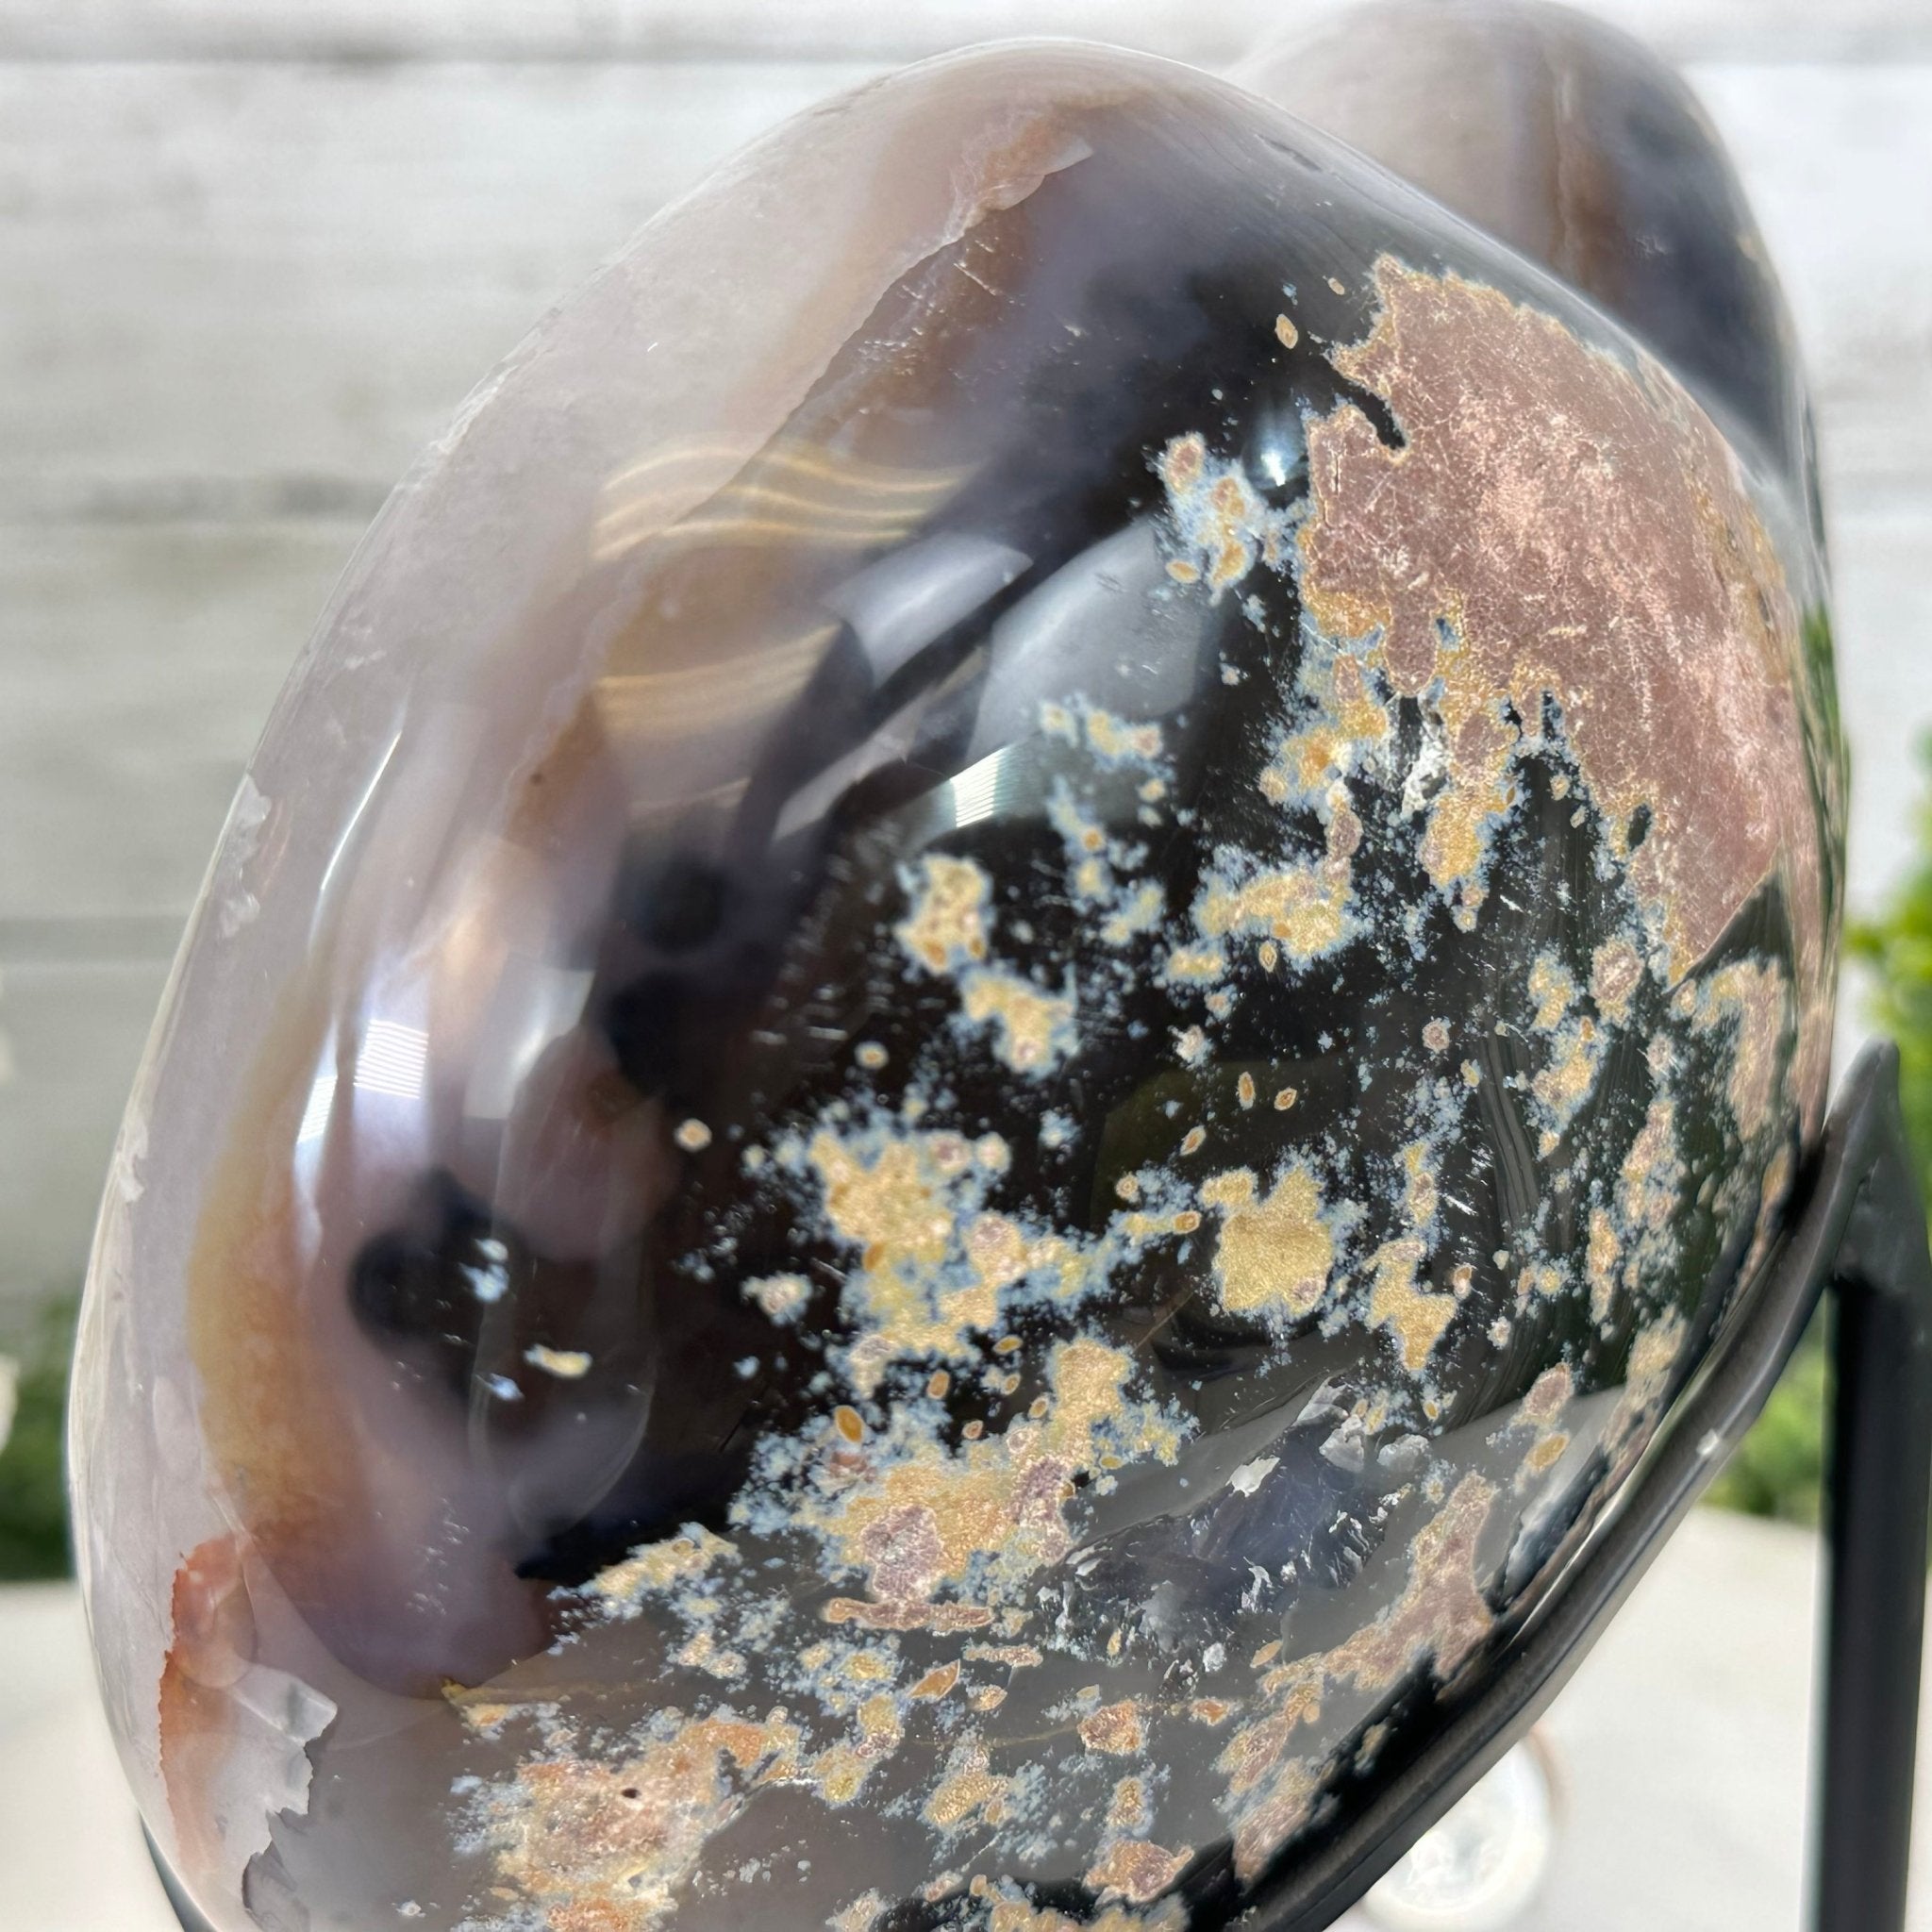 Polished Agate Heart Geode on a Metal Stand, 9.5 lbs & 8.3" Tall, Model #5468-0083 by Brazil Gems - Brazil GemsBrazil GemsPolished Agate Heart Geode on a Metal Stand, 9.5 lbs & 8.3" Tall, Model #5468-0083 by Brazil GemsHearts5468-0083